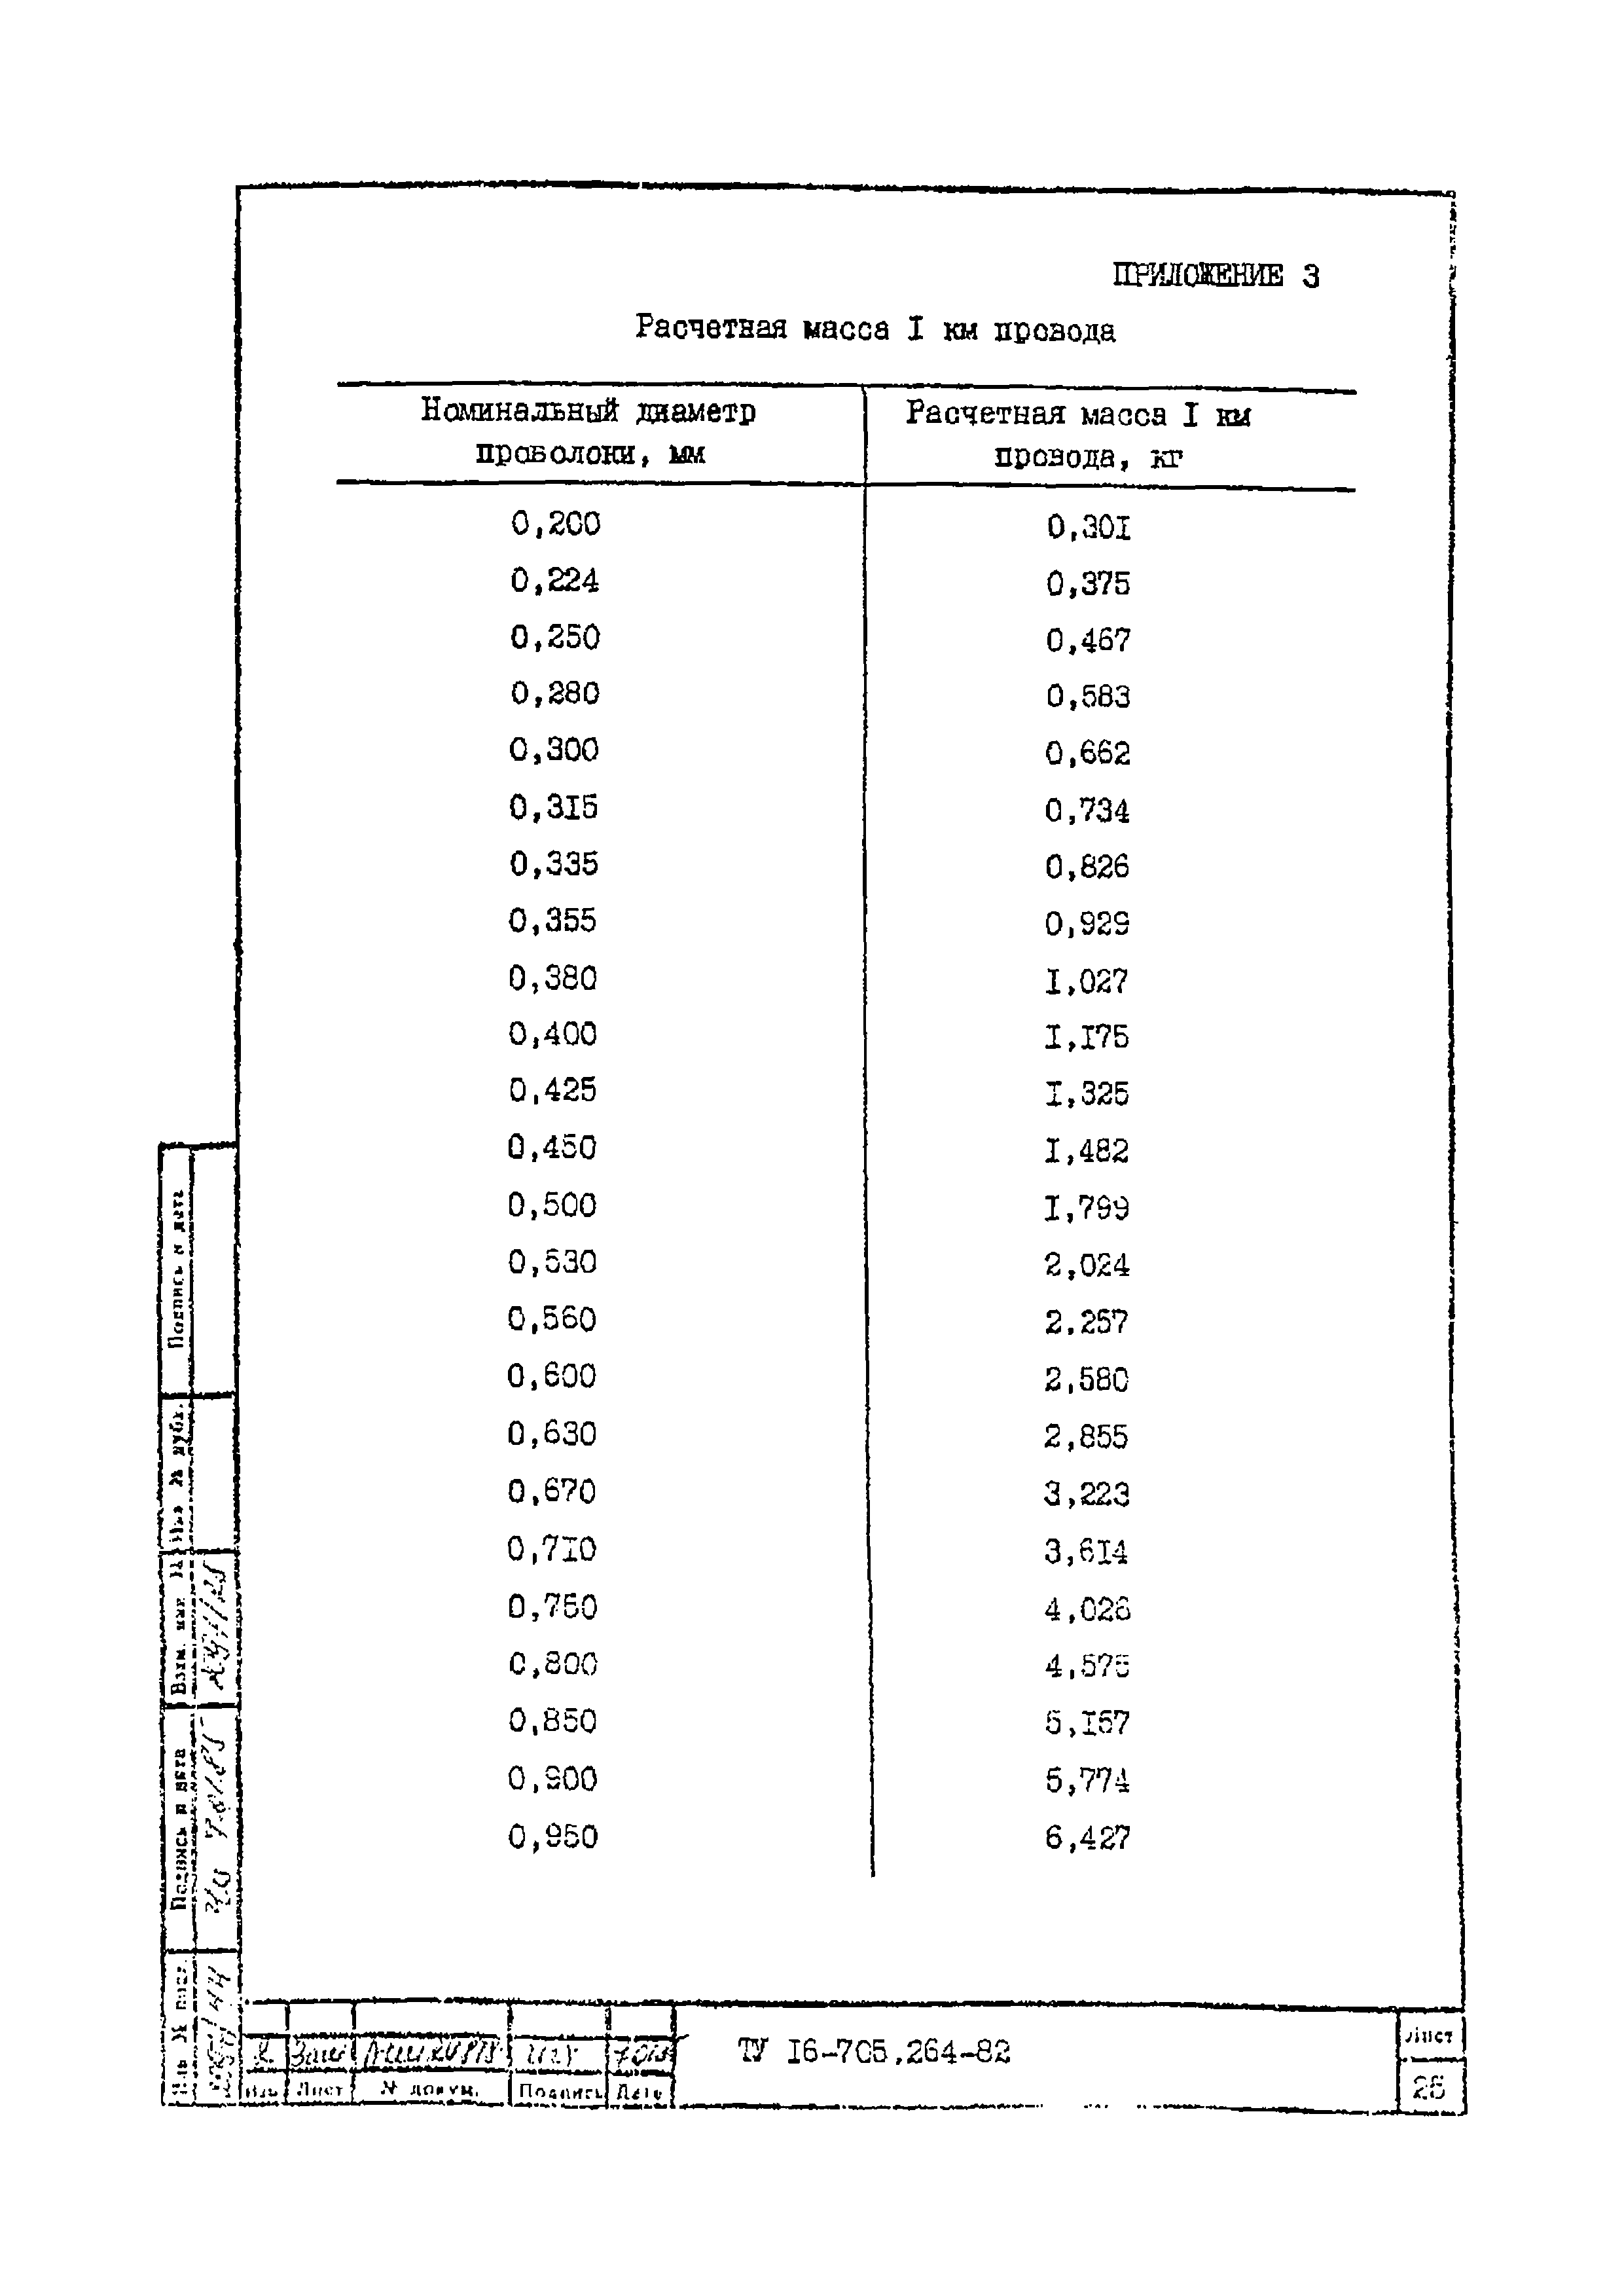 ТУ 16-705.264-82